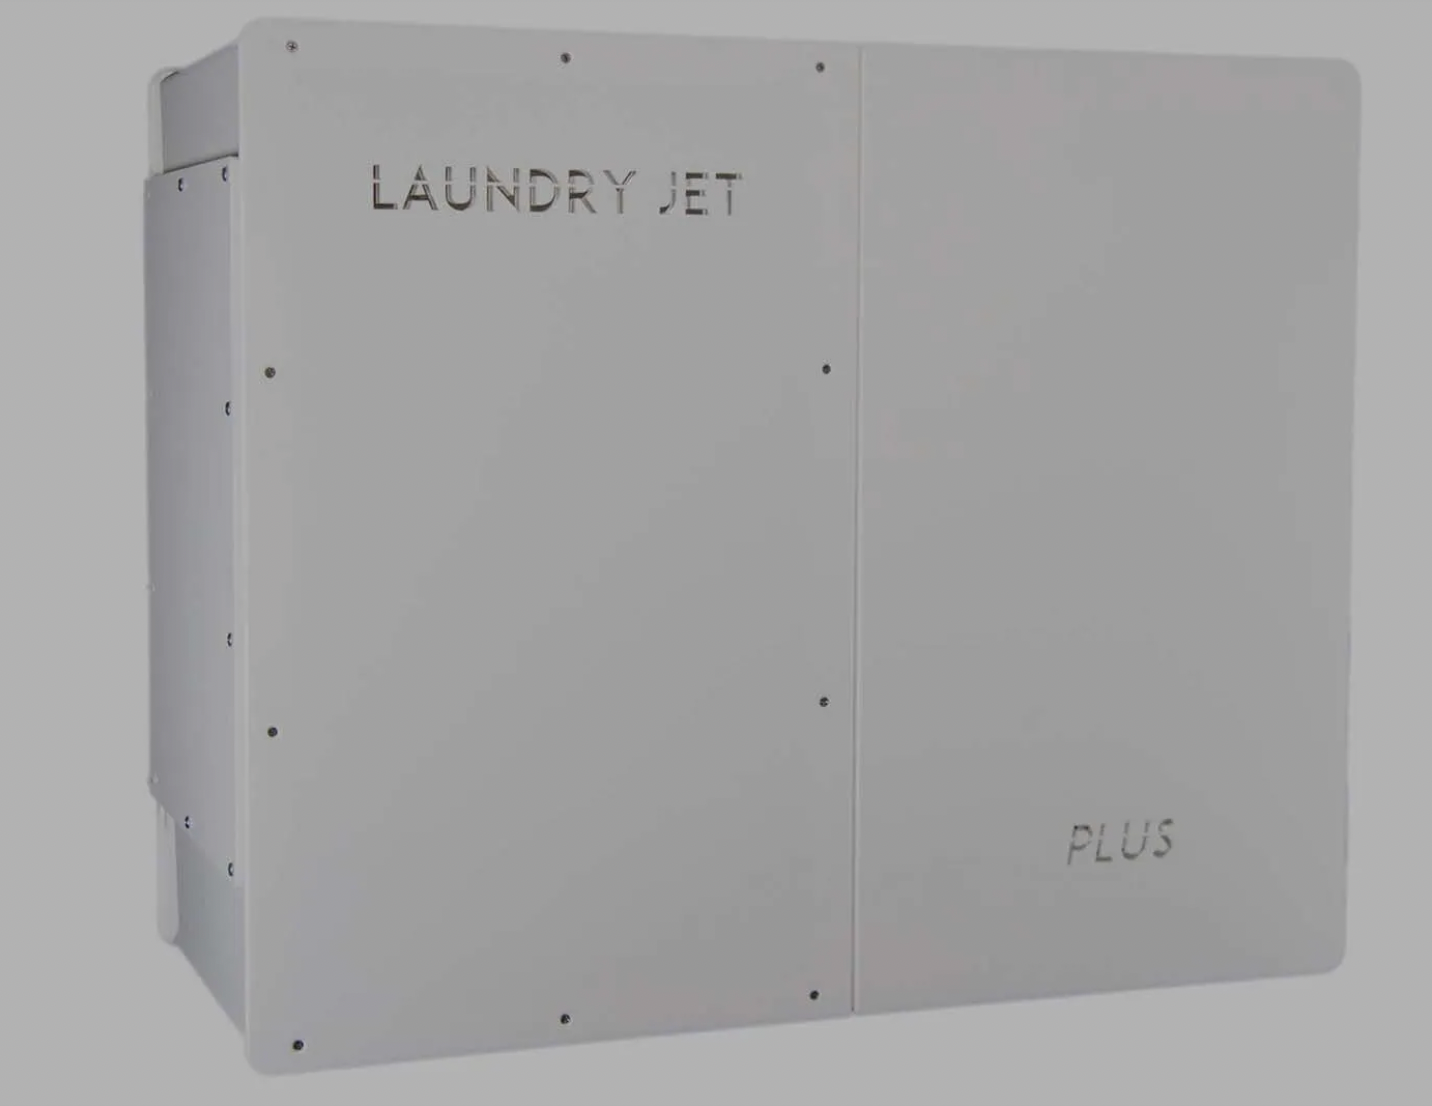 The laundry jet